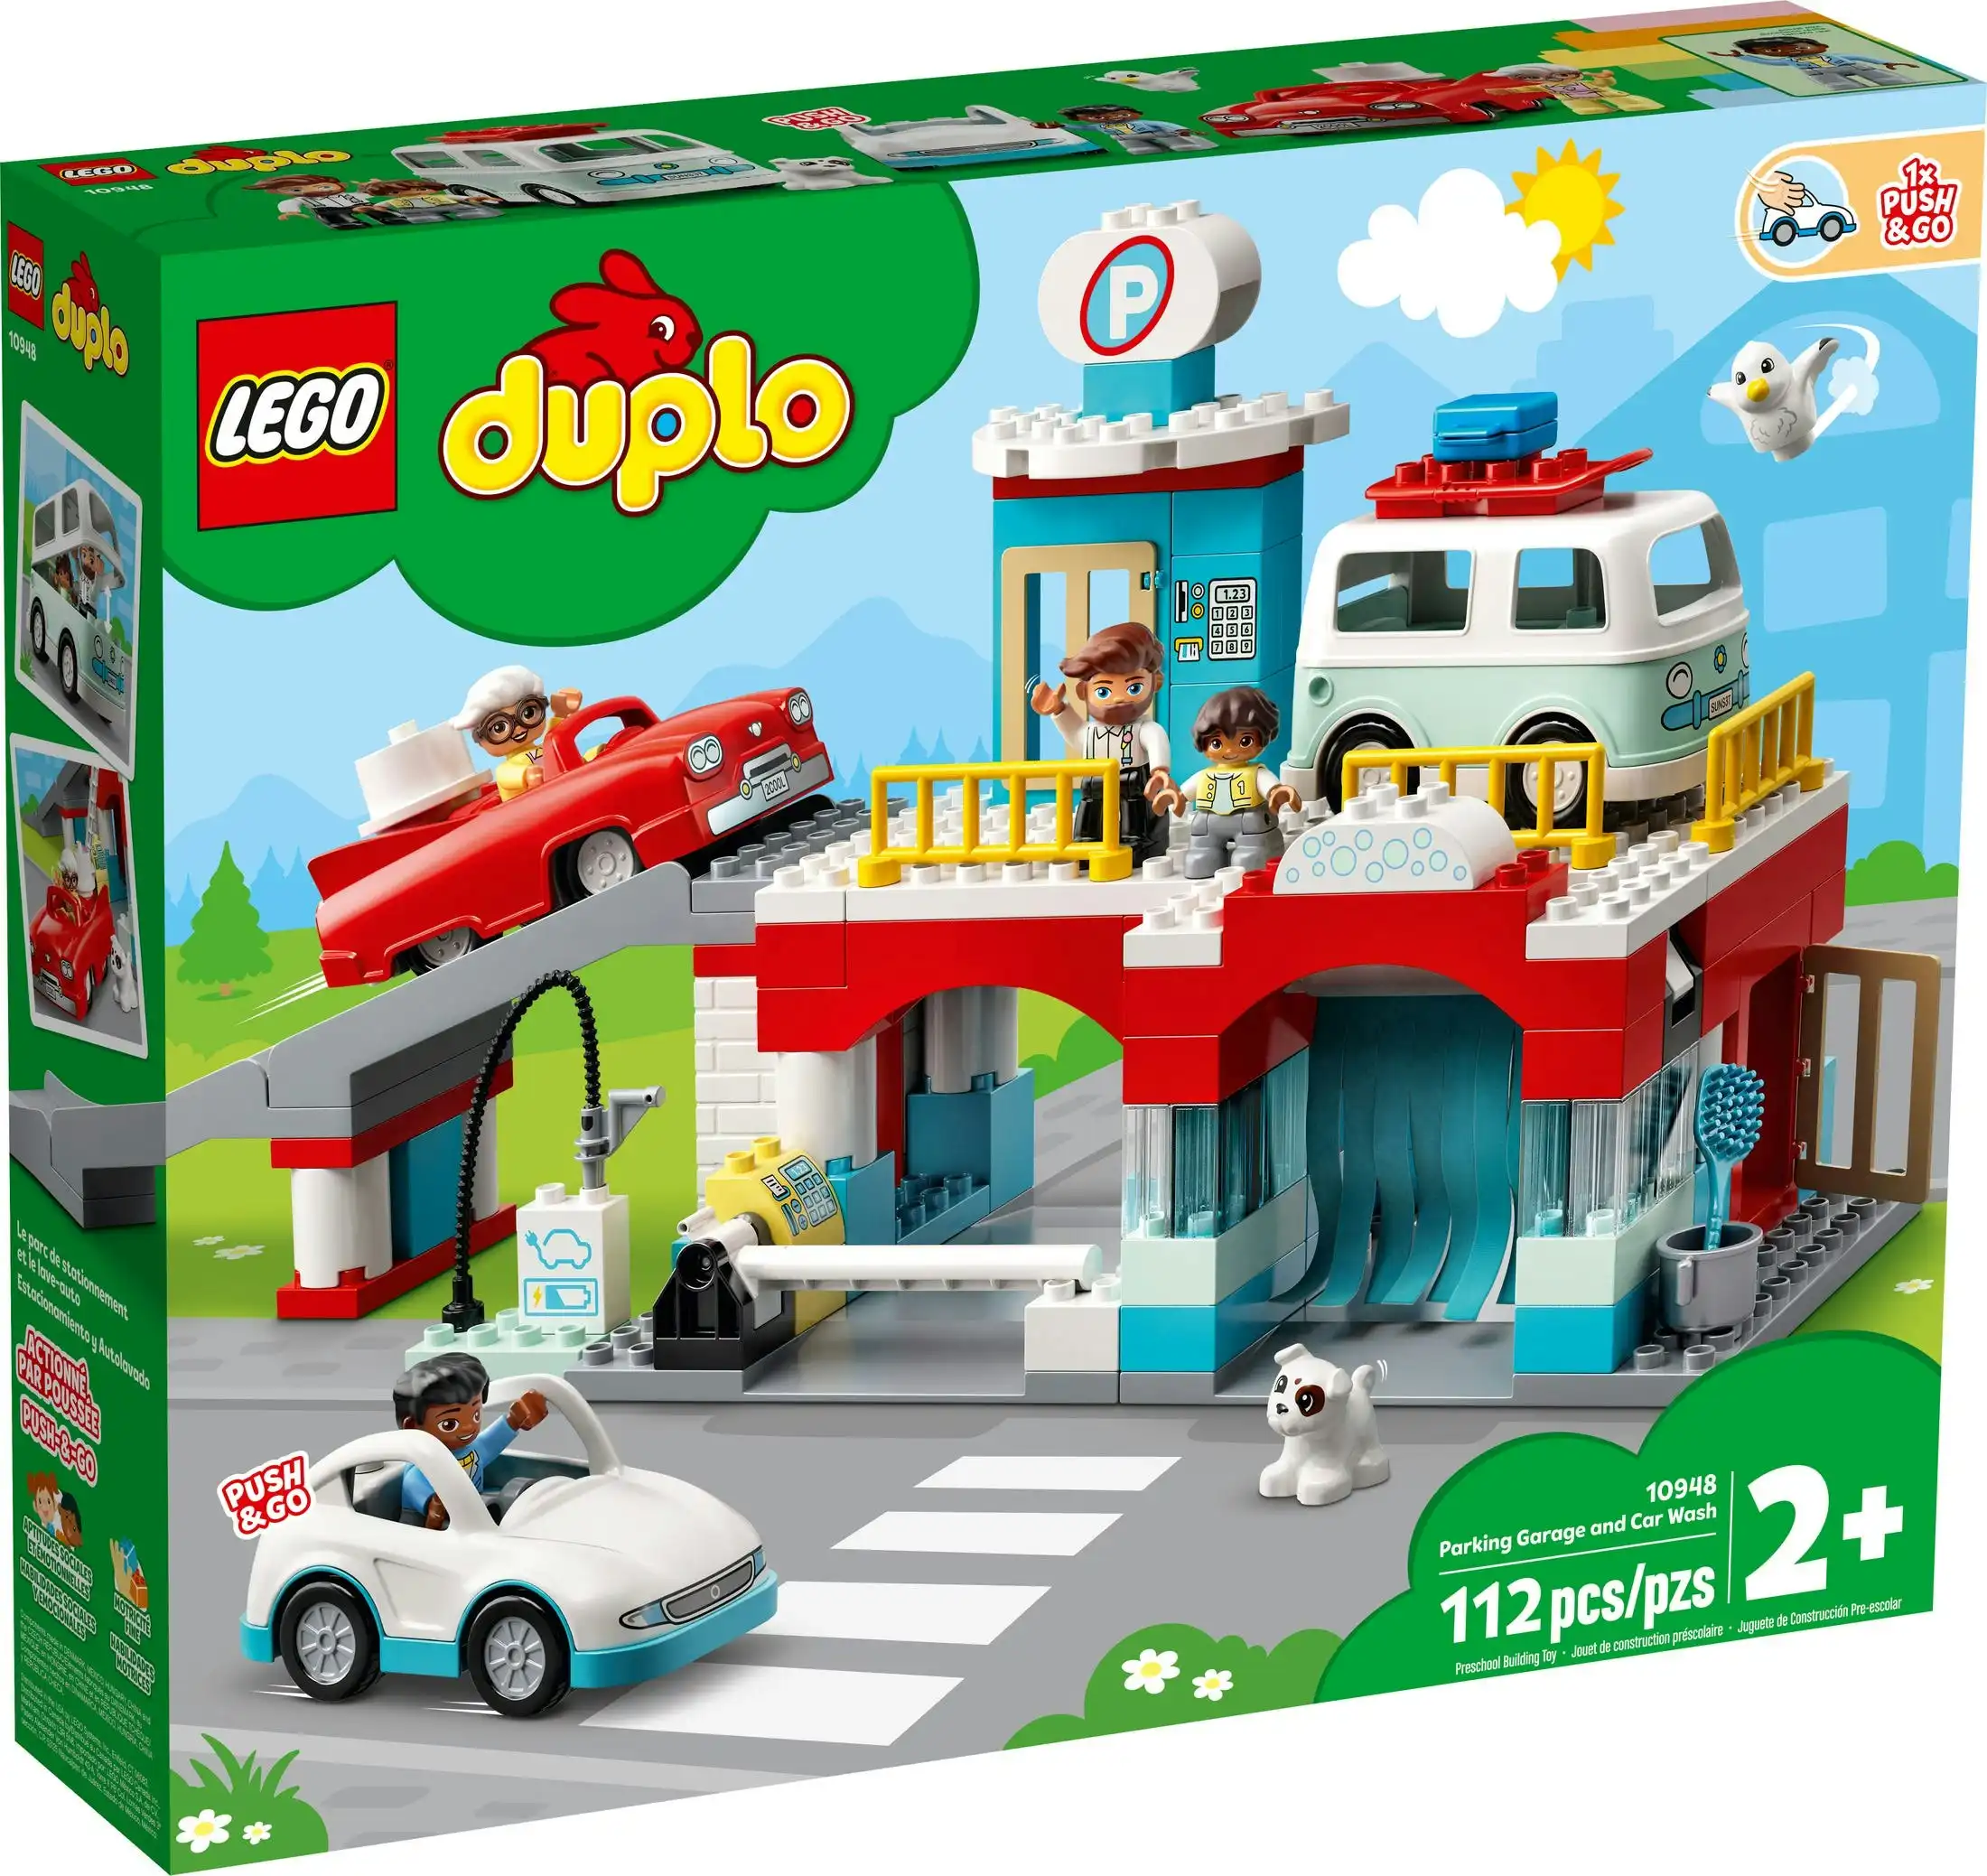 LEGO 10948 Parking Garage and Car Wash - Duplo